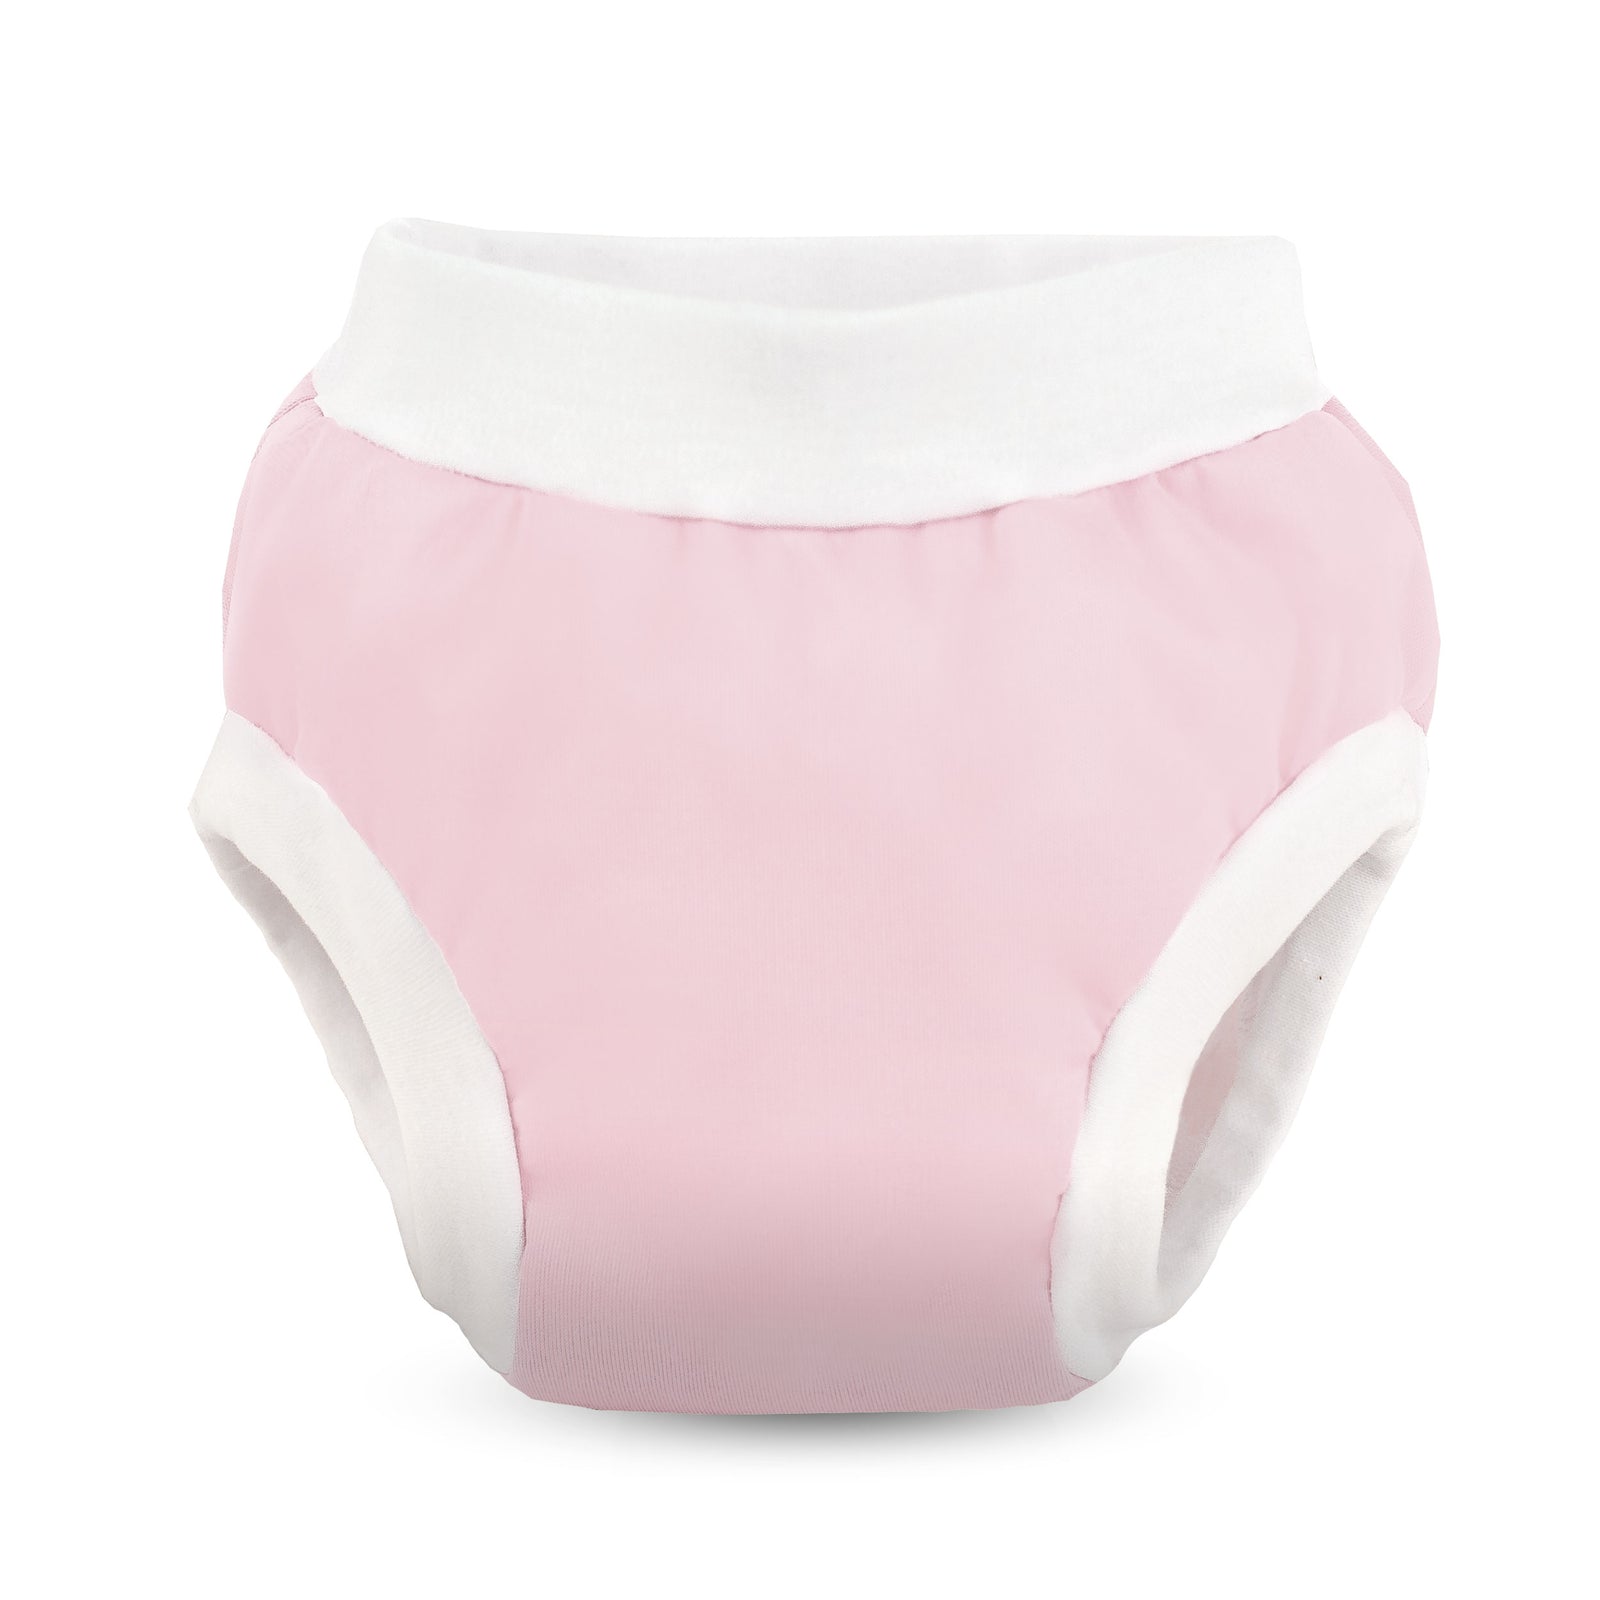 Frozen Toddler Girls Potty Training Pants, 100% Cotton Underwear, Cloth  Toilet Trainer Panties, Padded Undies, 7-Pack, Size 4T